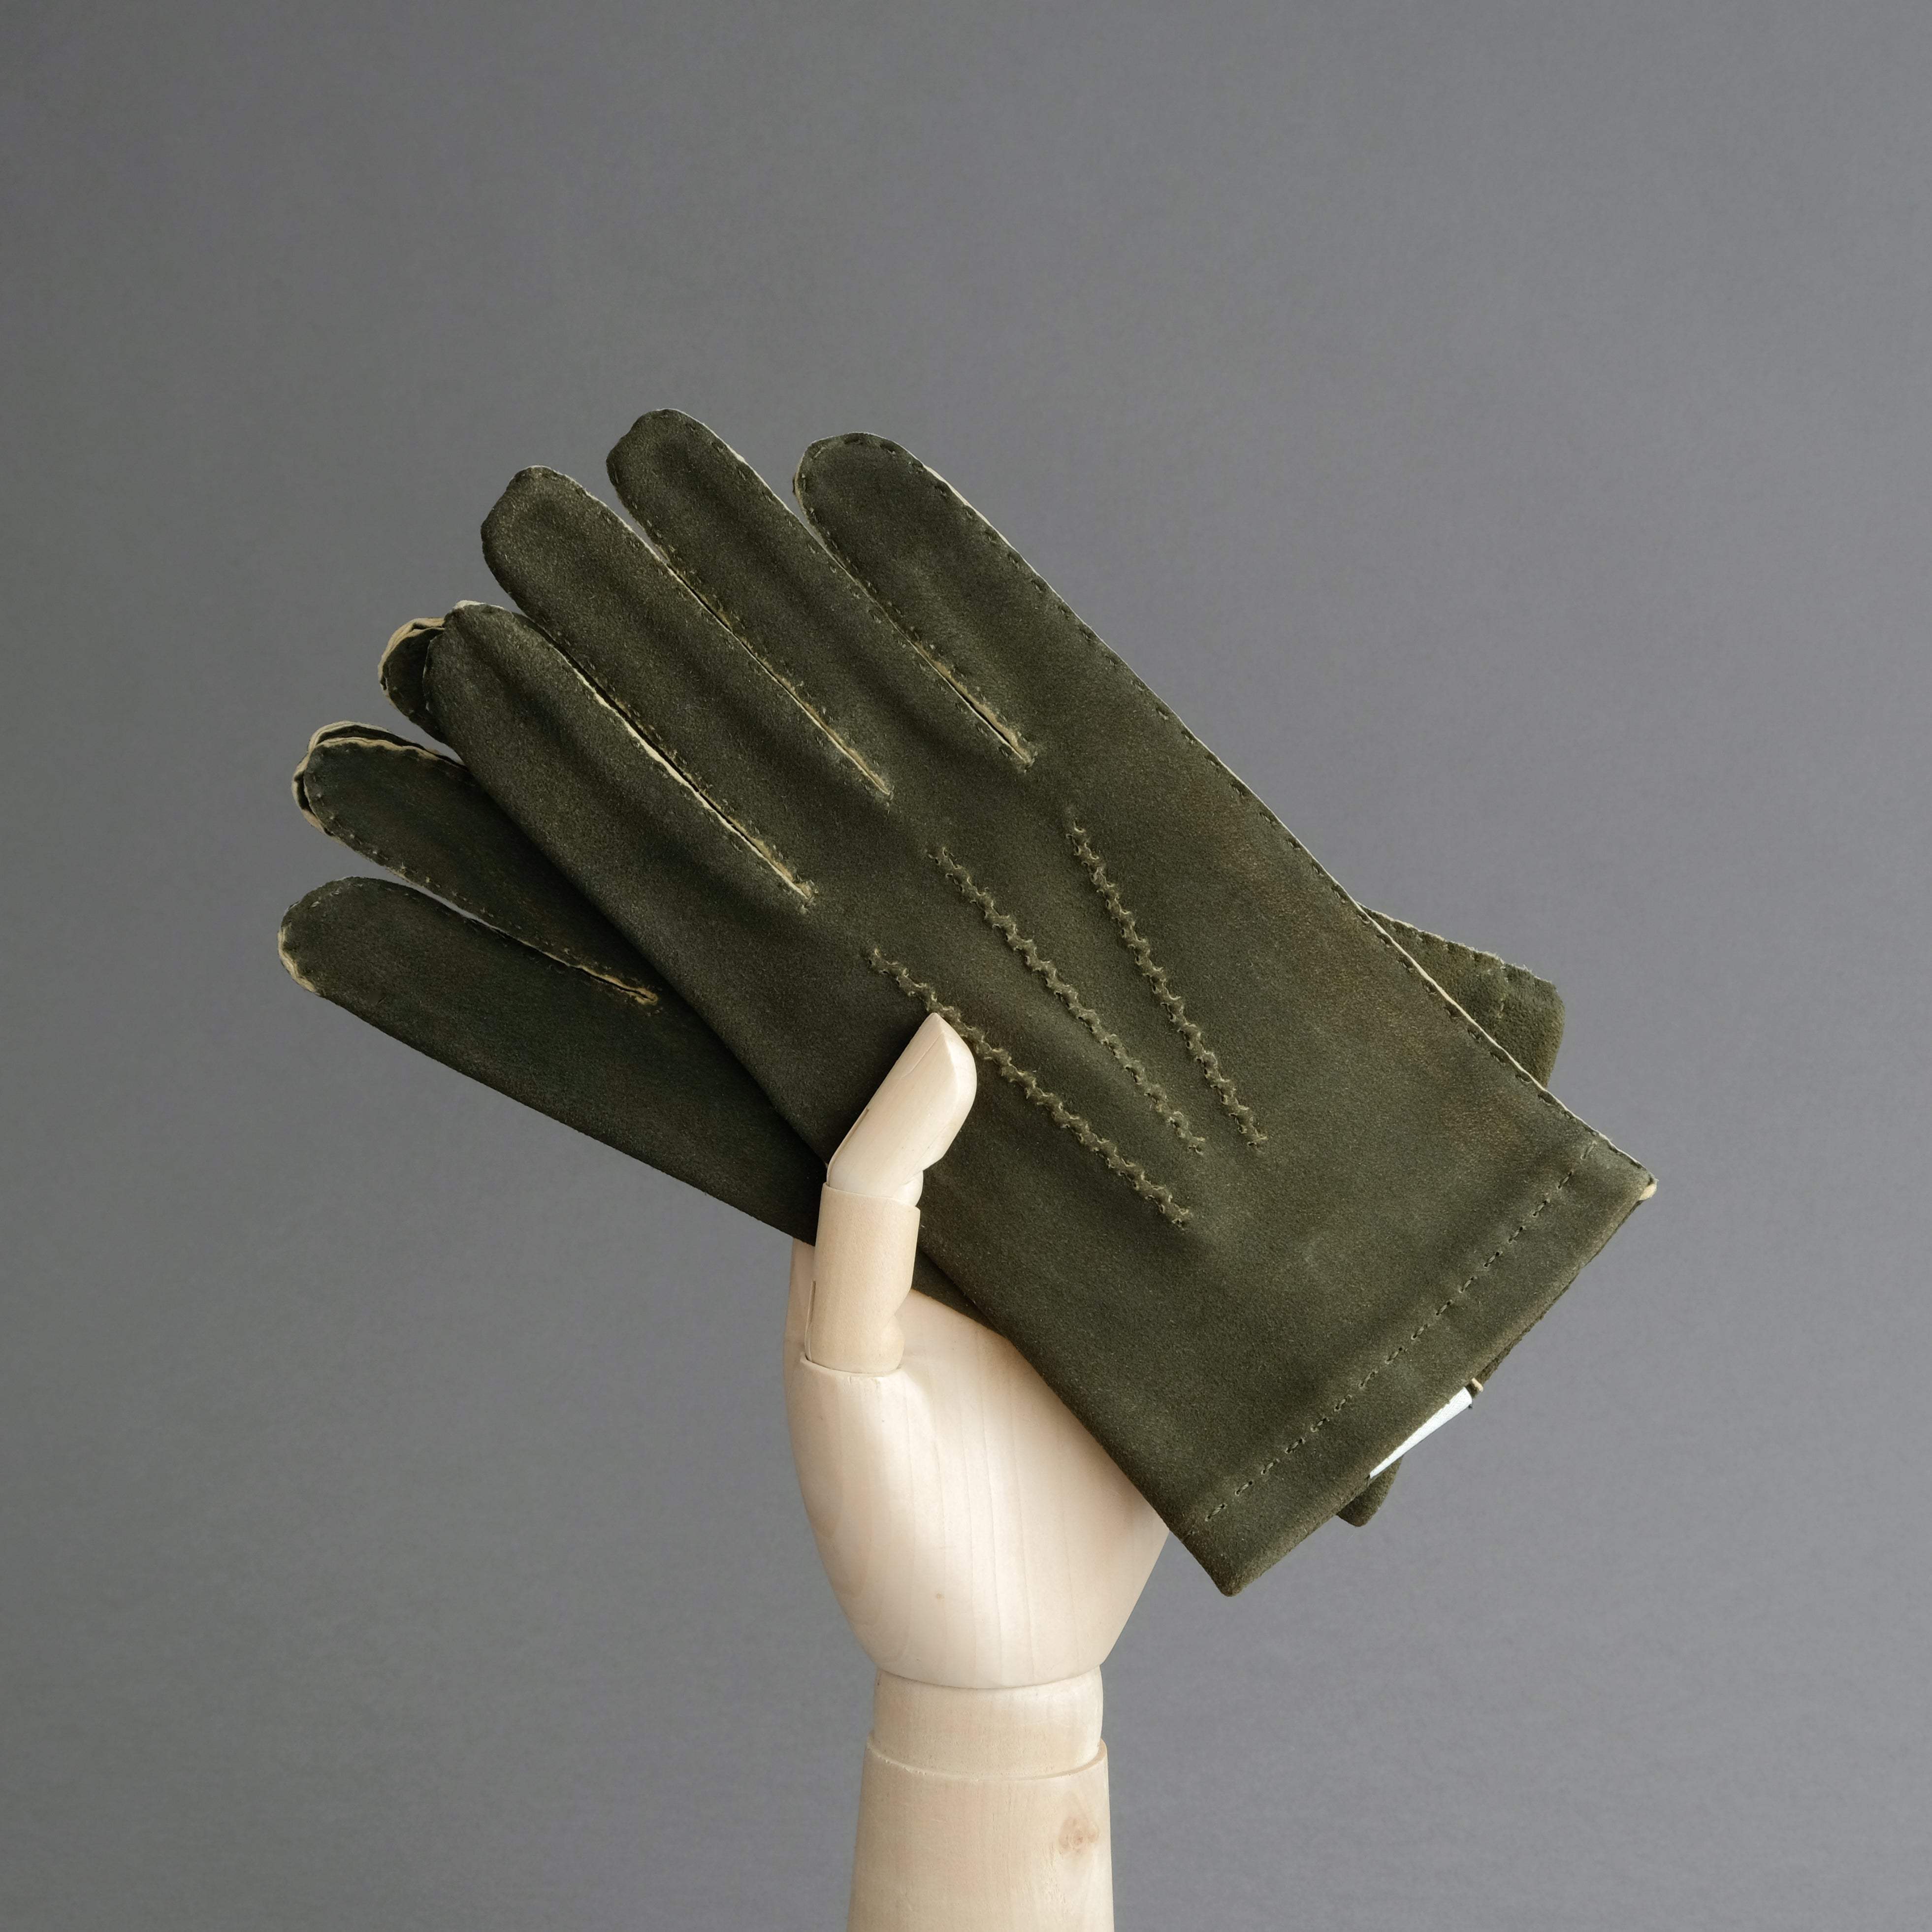 Gentlemen's Hand Sewn Unlined Gloves from Green Doeskin - TR Handschuhe Wien - Thomas Riemer Handmade Gloves